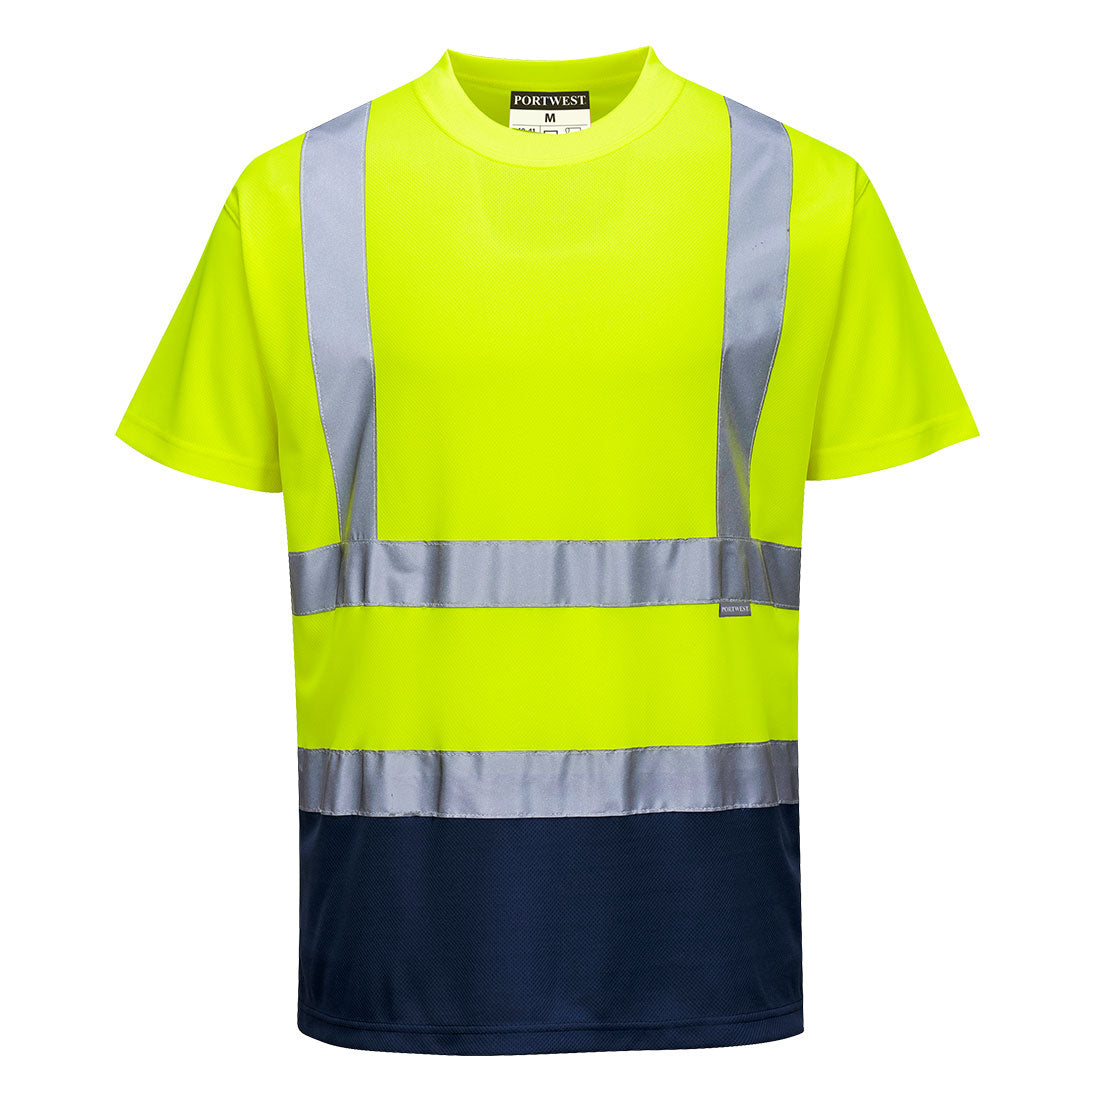 Portwest S378 Hi-Vis Contrast T-Shirt Yellow Navy